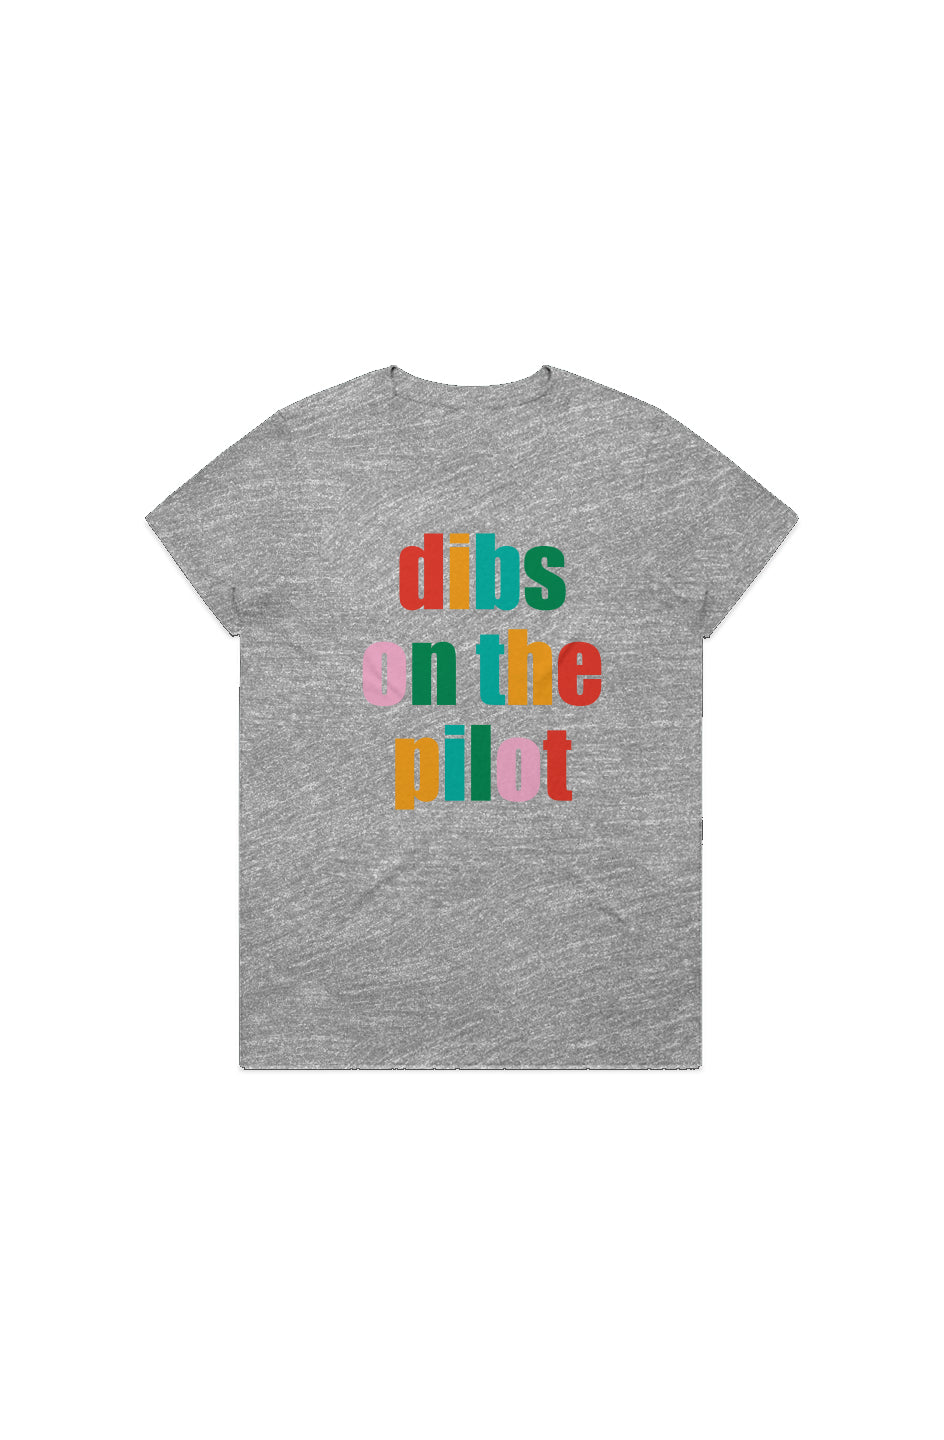 Dibs on the Pilot - Colors - Women's T-shirt